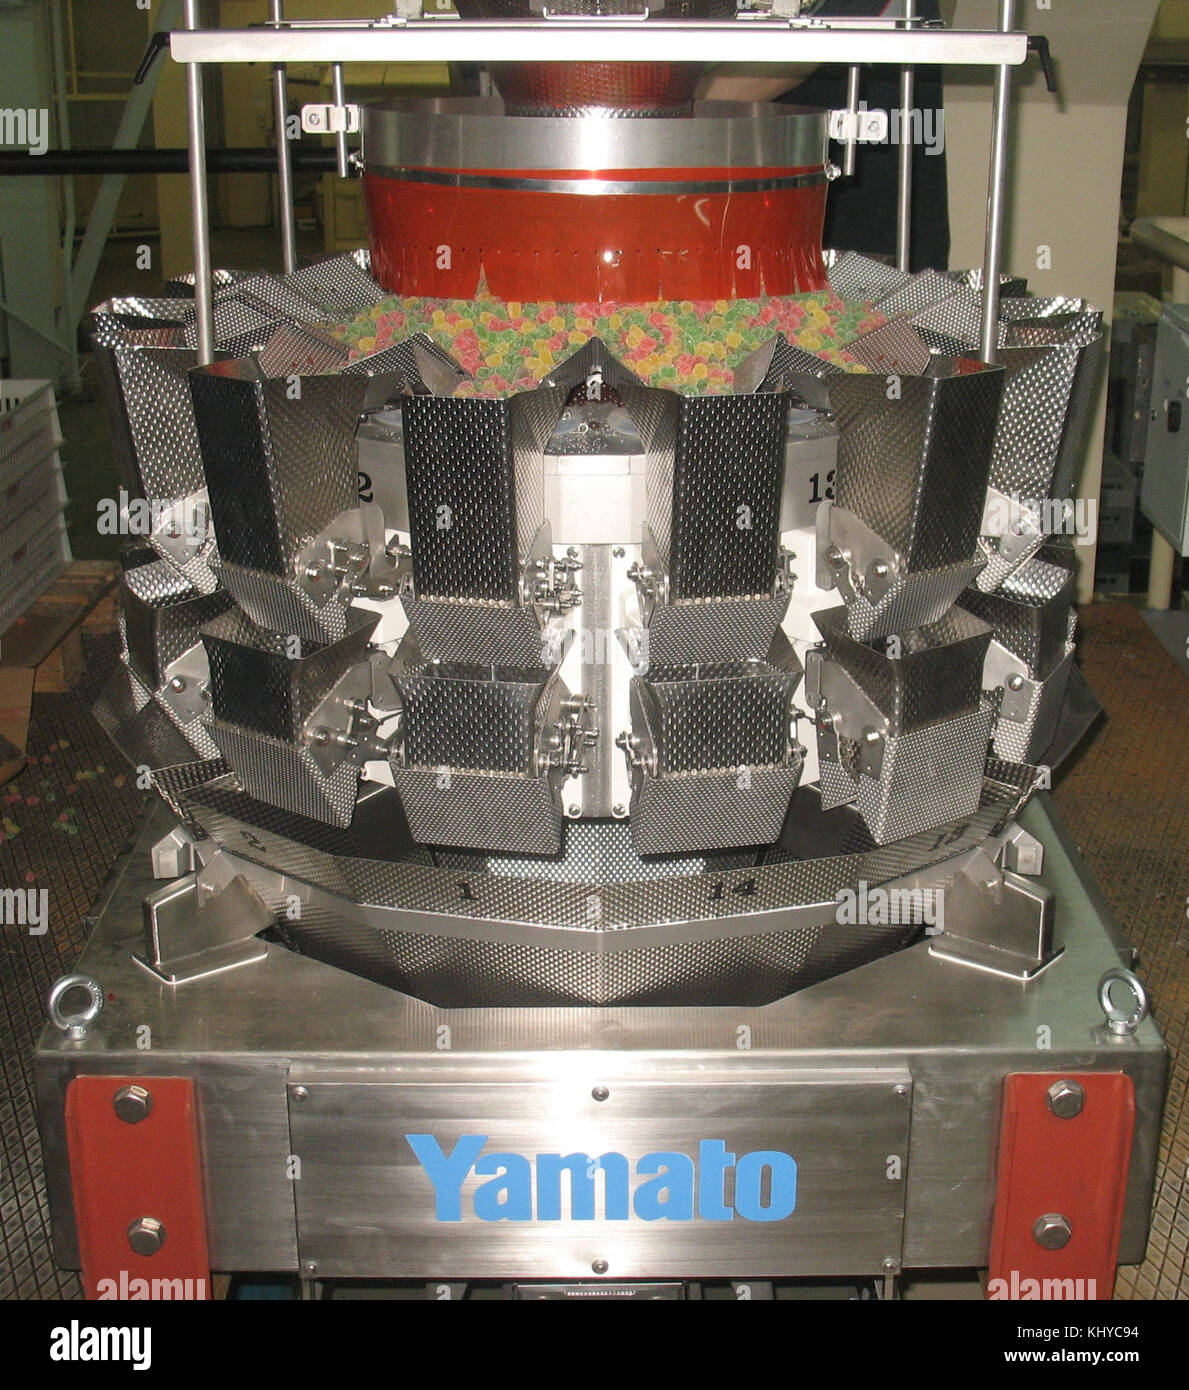 Yamato multihead weigher Stock Photo - Alamy